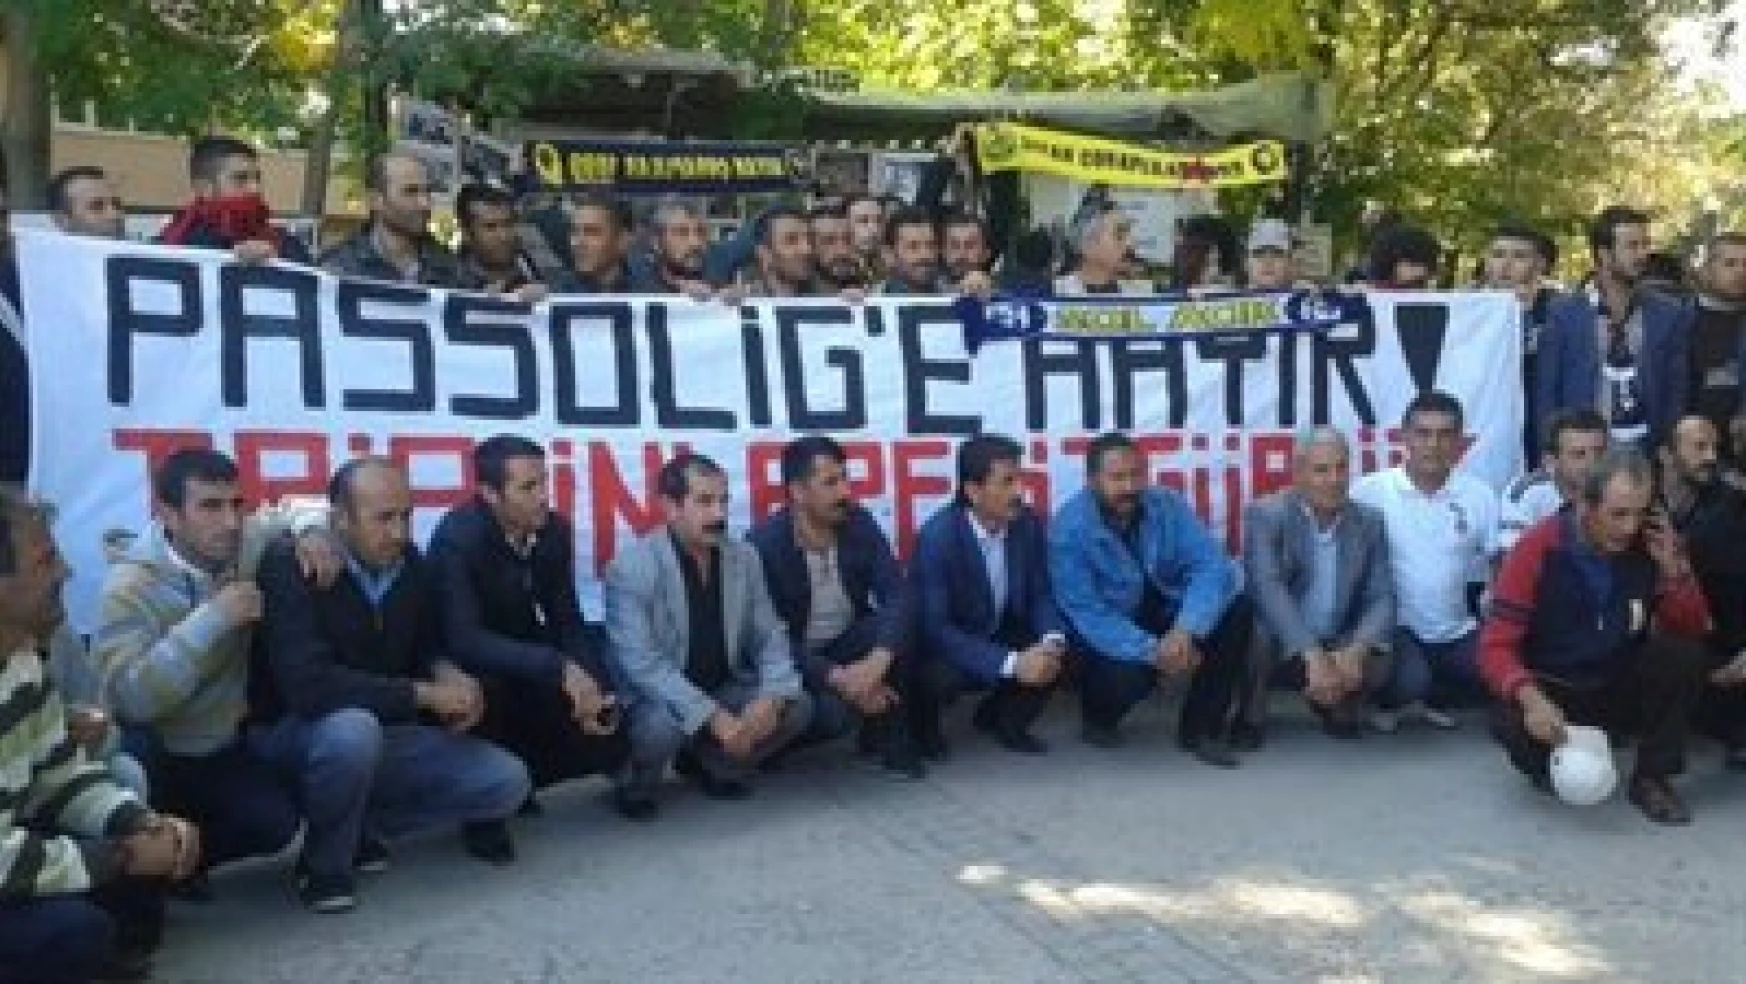 Ankara’da Passolig eylemi